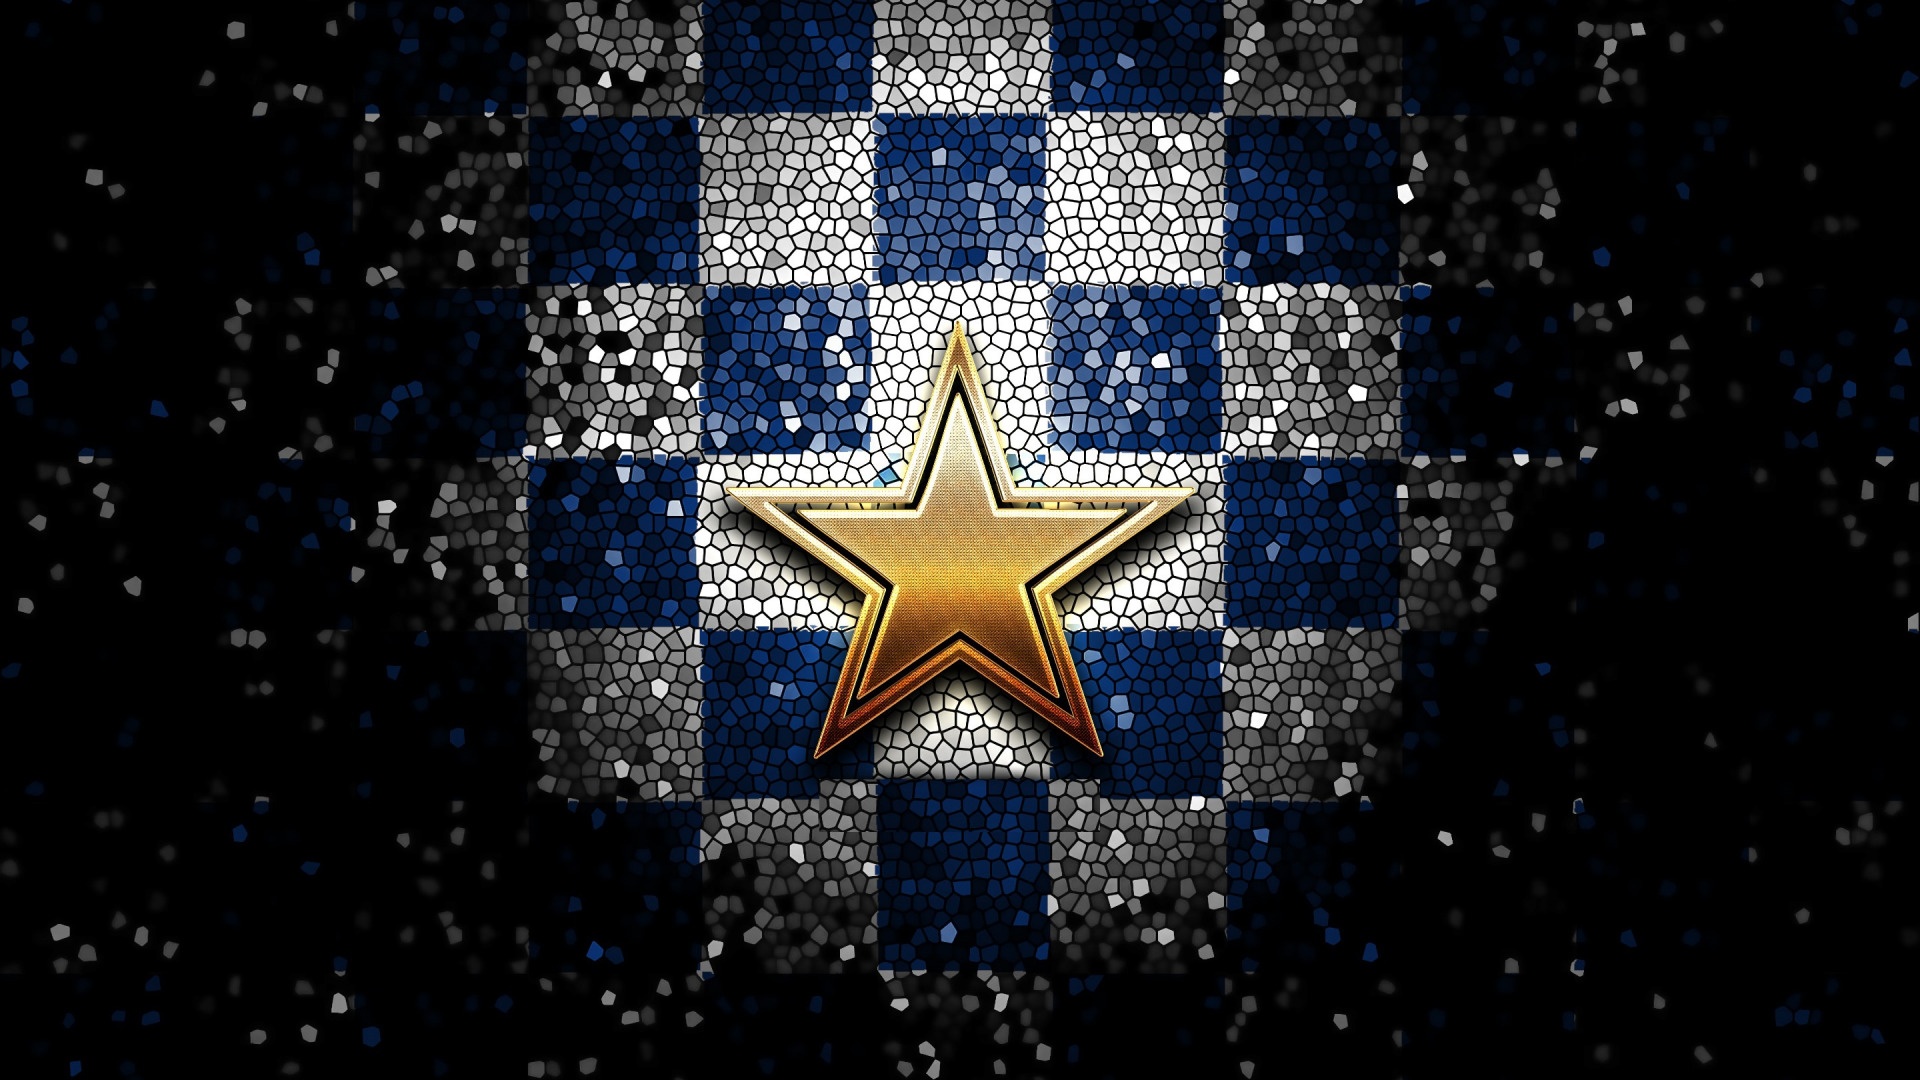 Dallas Cowboys desktop wallpaper free download